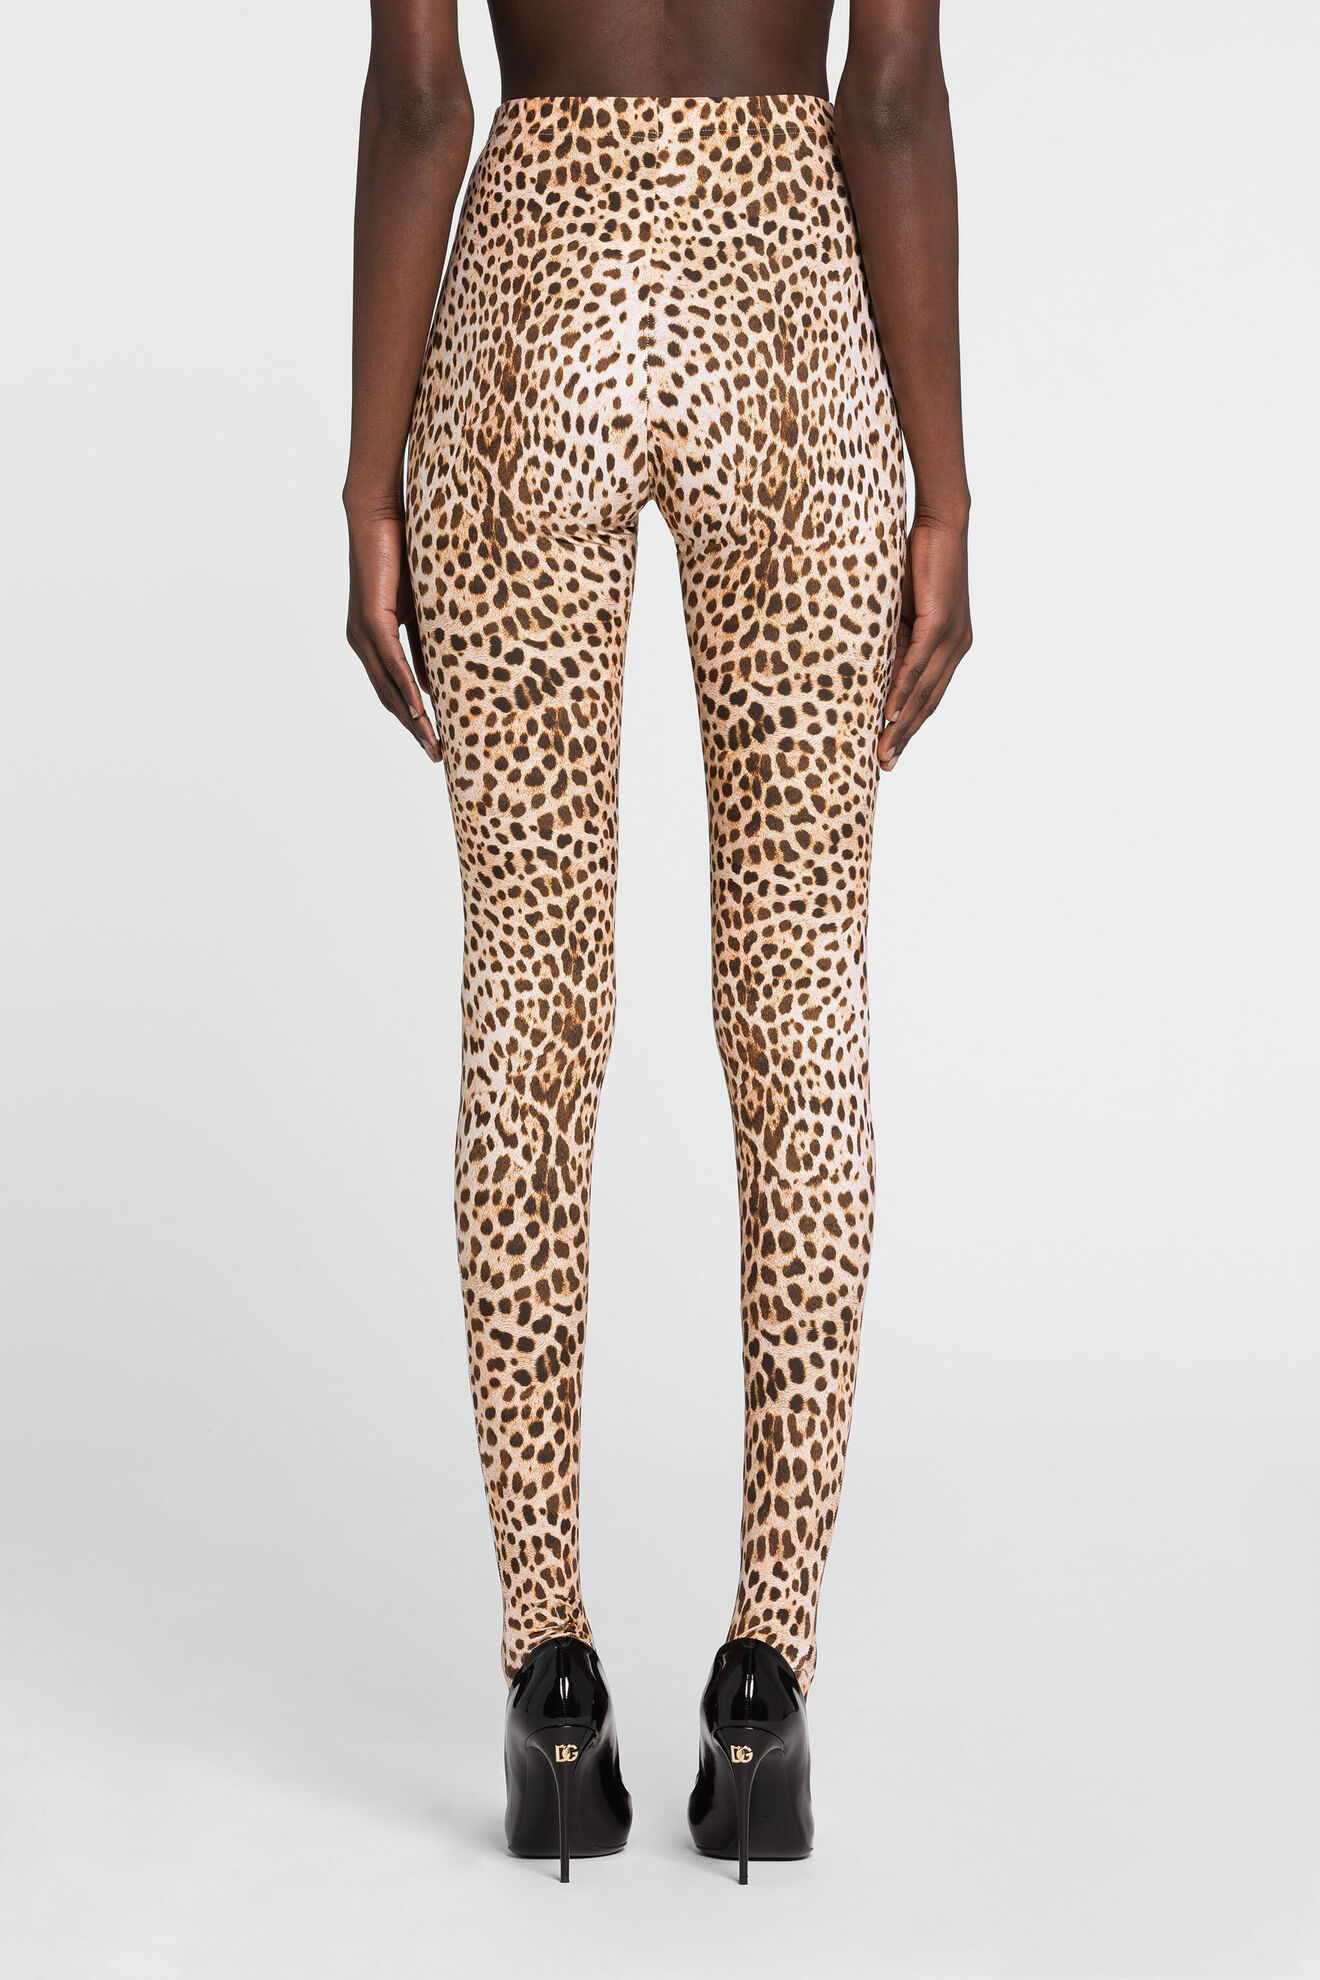 Legging Lycra Cheetah Bege - Fitlegs